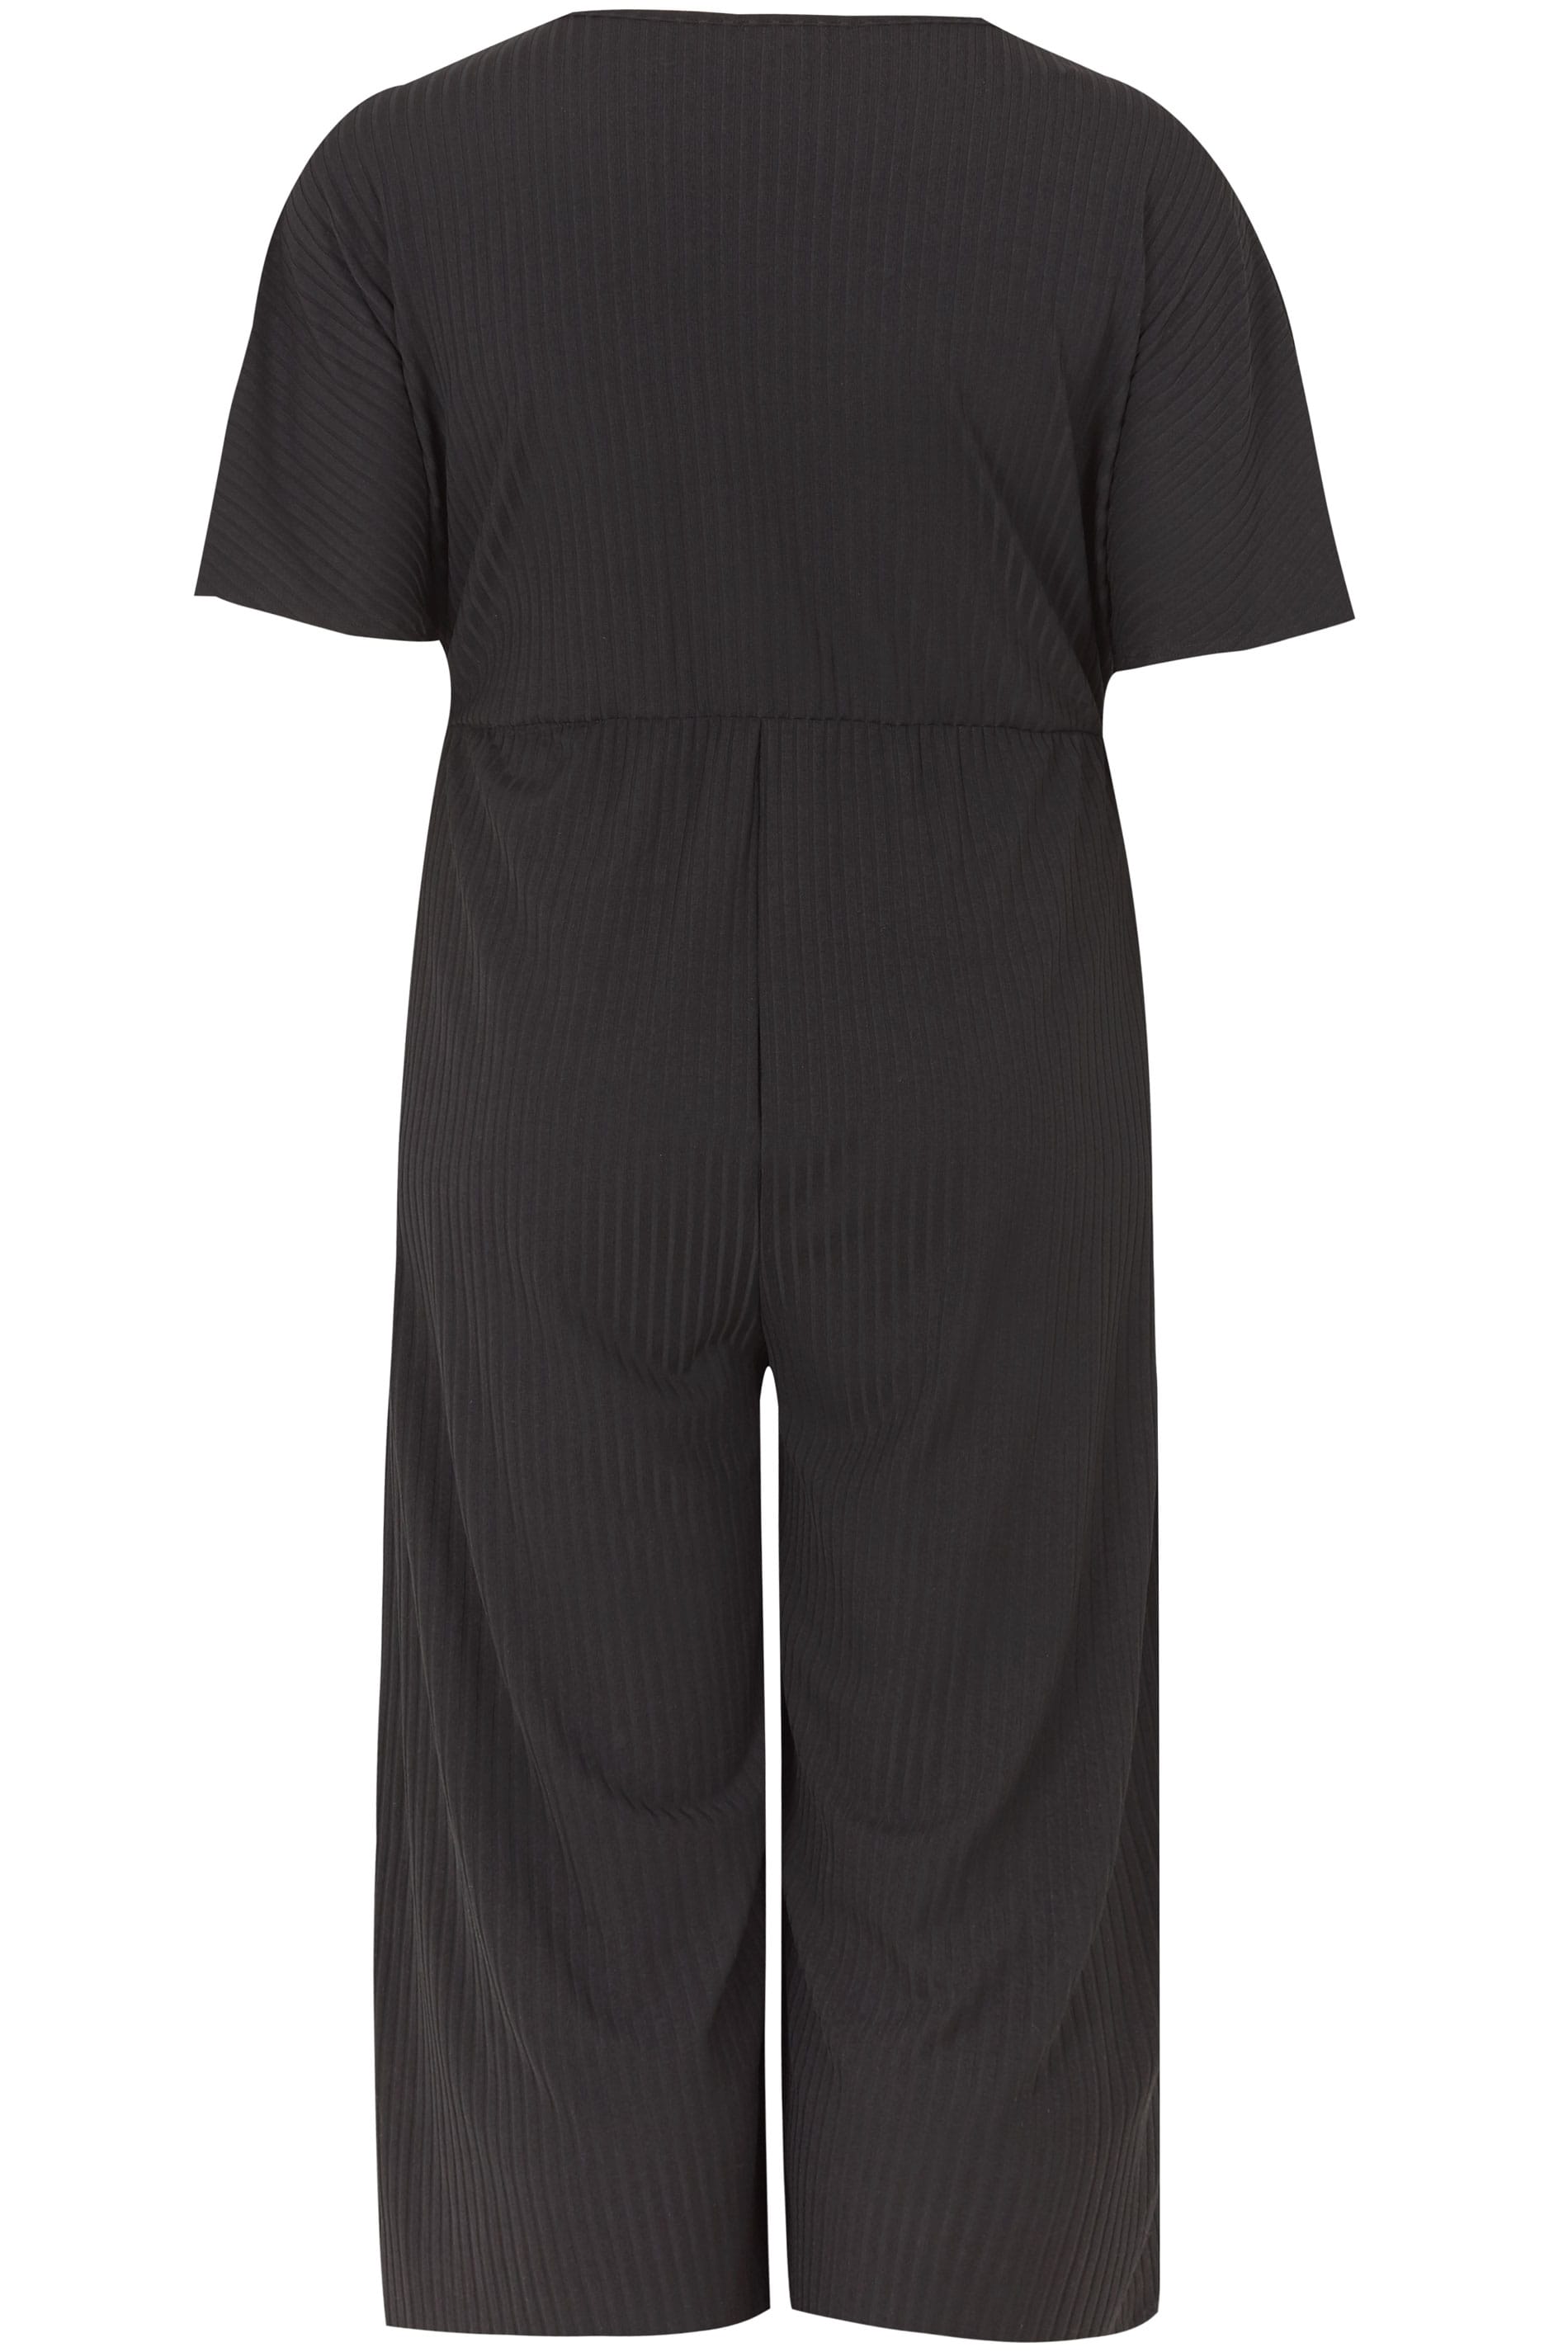 Black Jersey Cropped Culotte Wrap Front Jumpsuit, plus size 16 to 32 ...